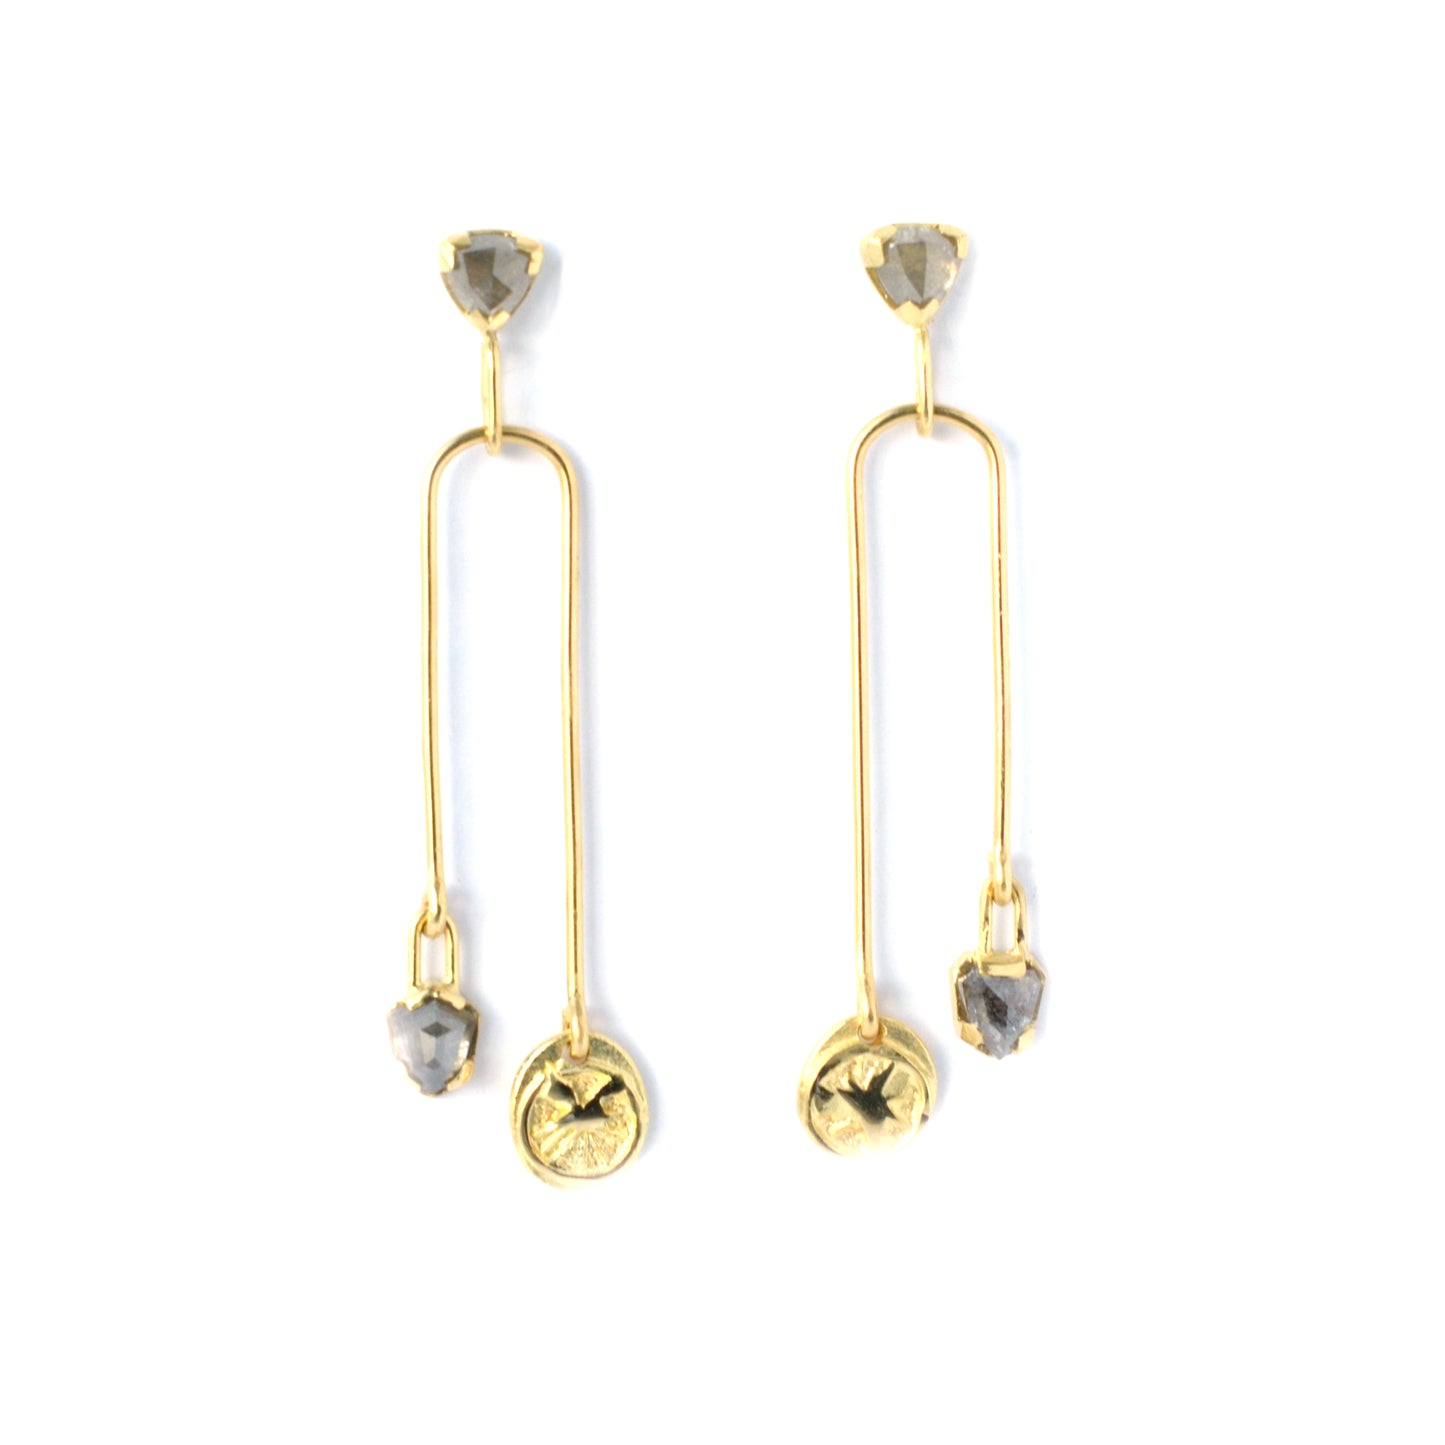 Starburst diamond drop earrings